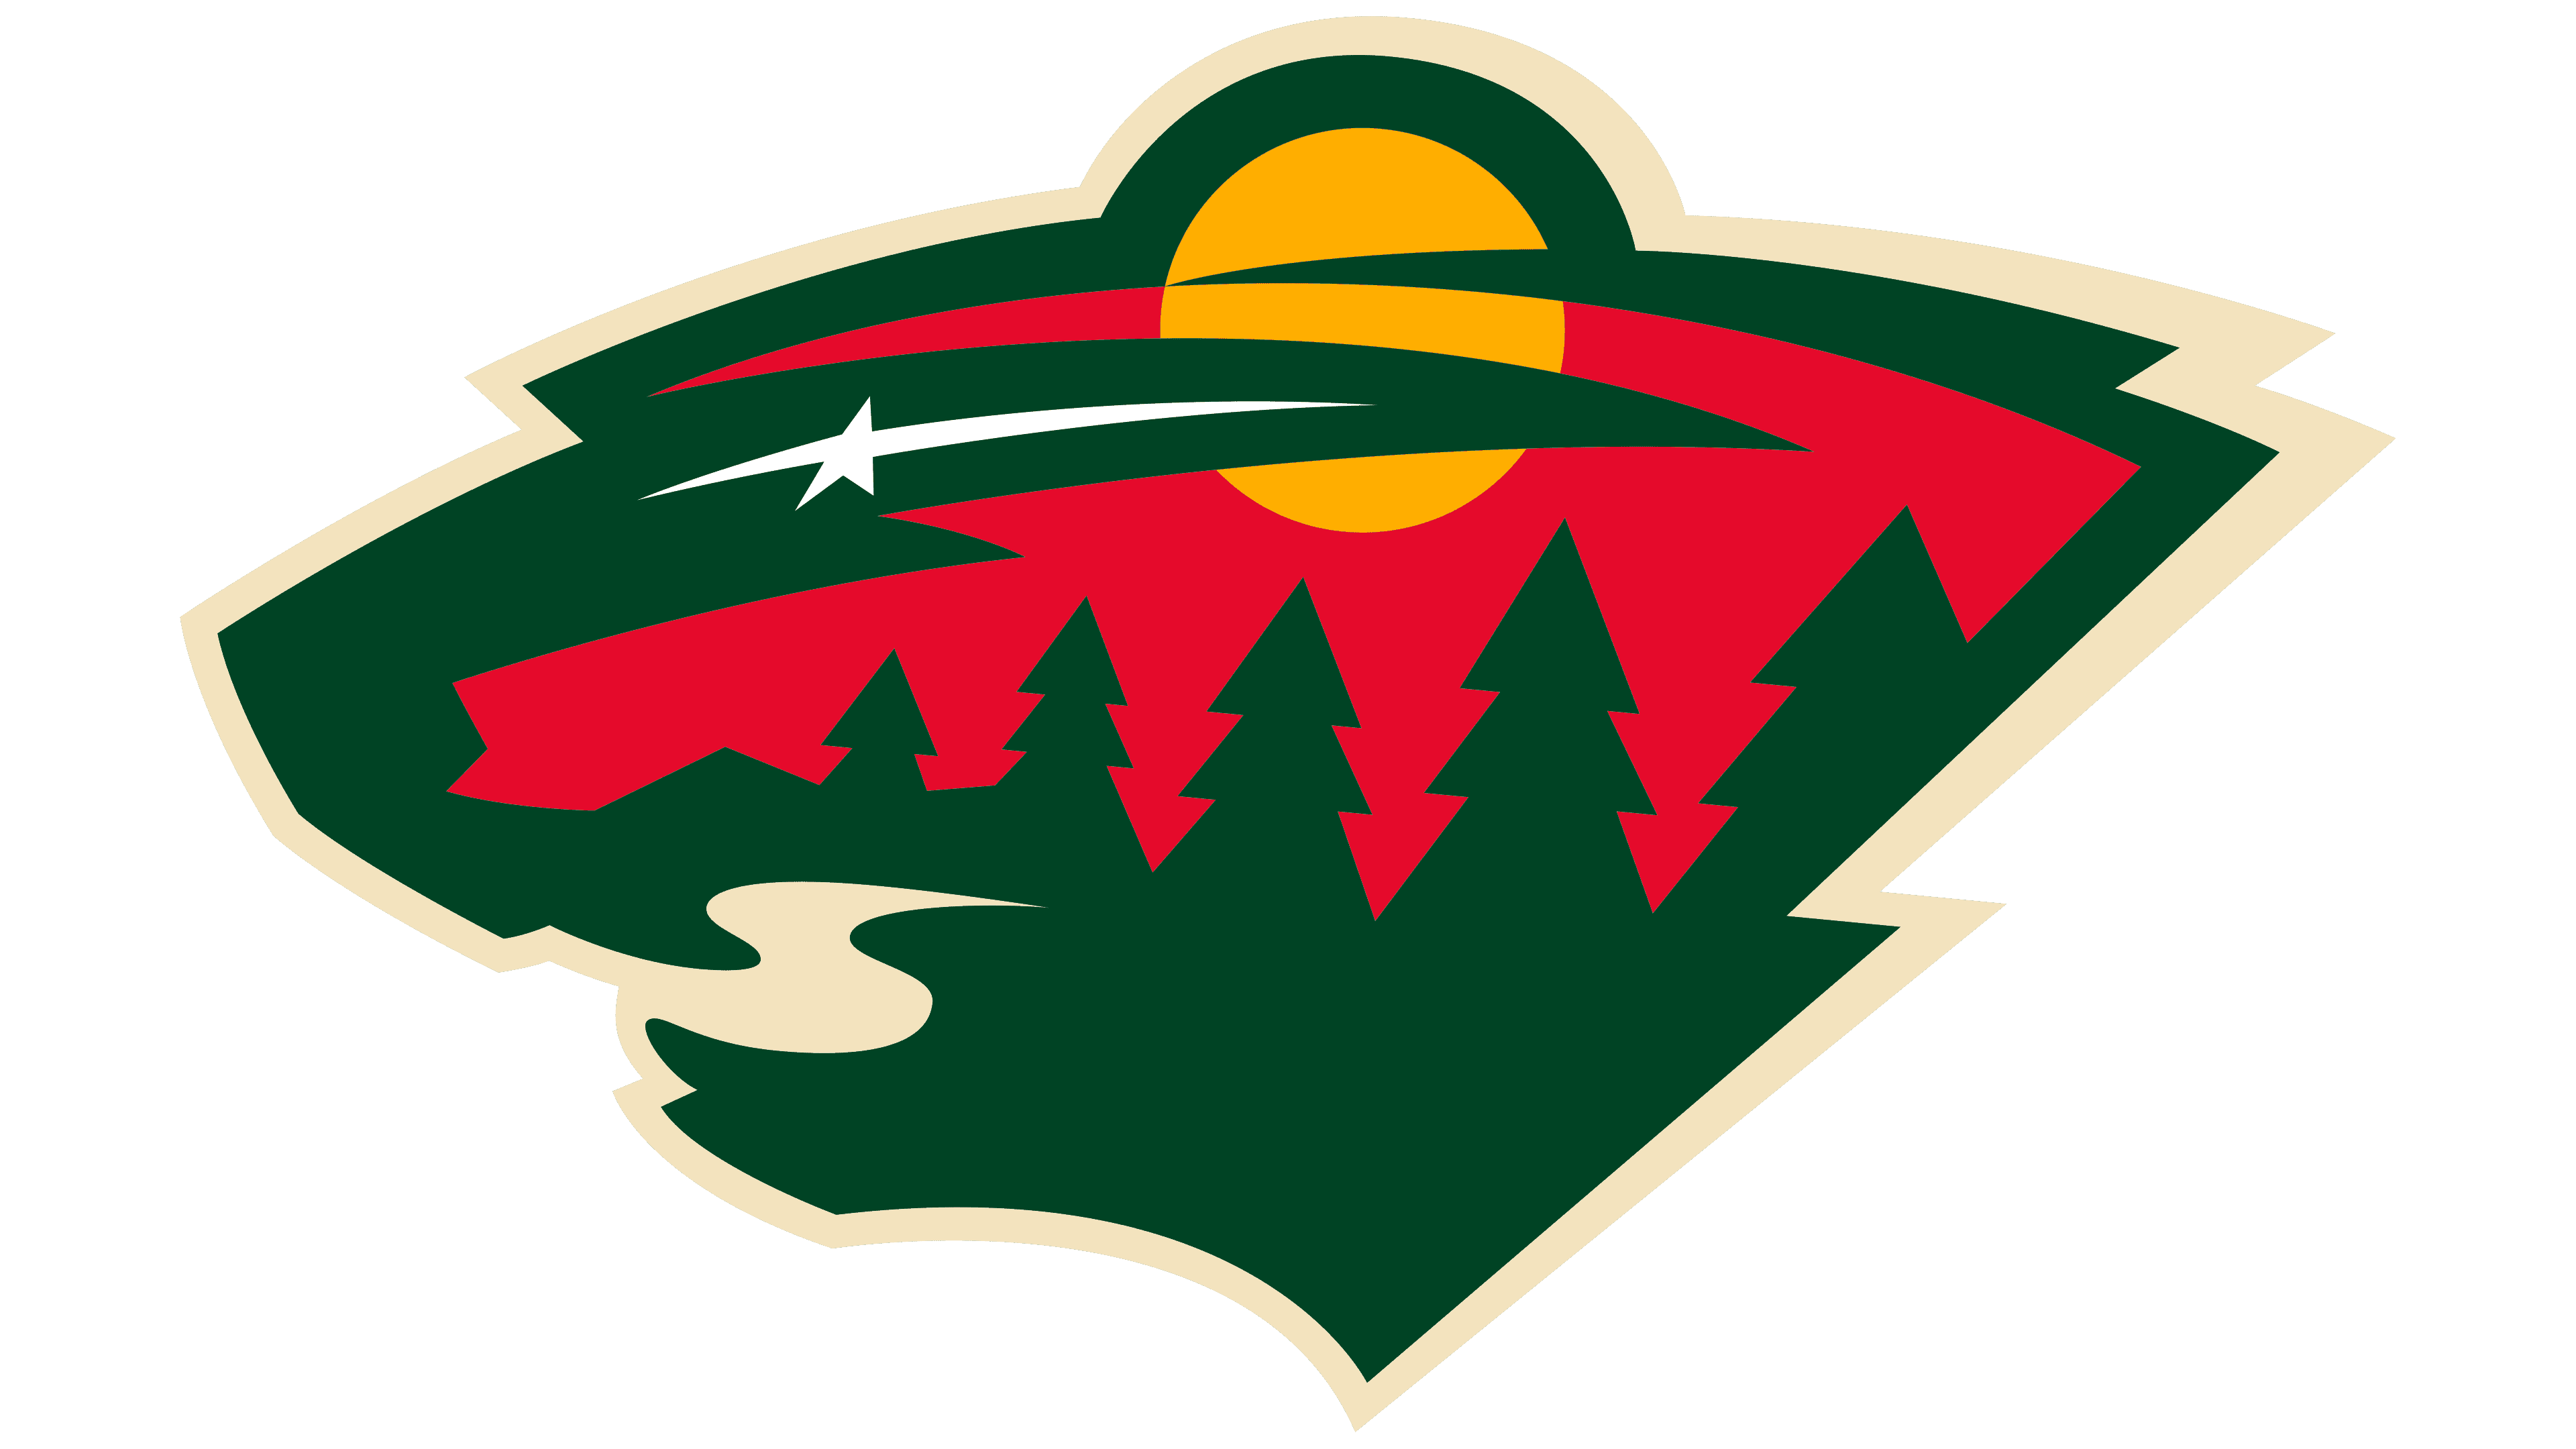 Minnesota Wild Logo Explained